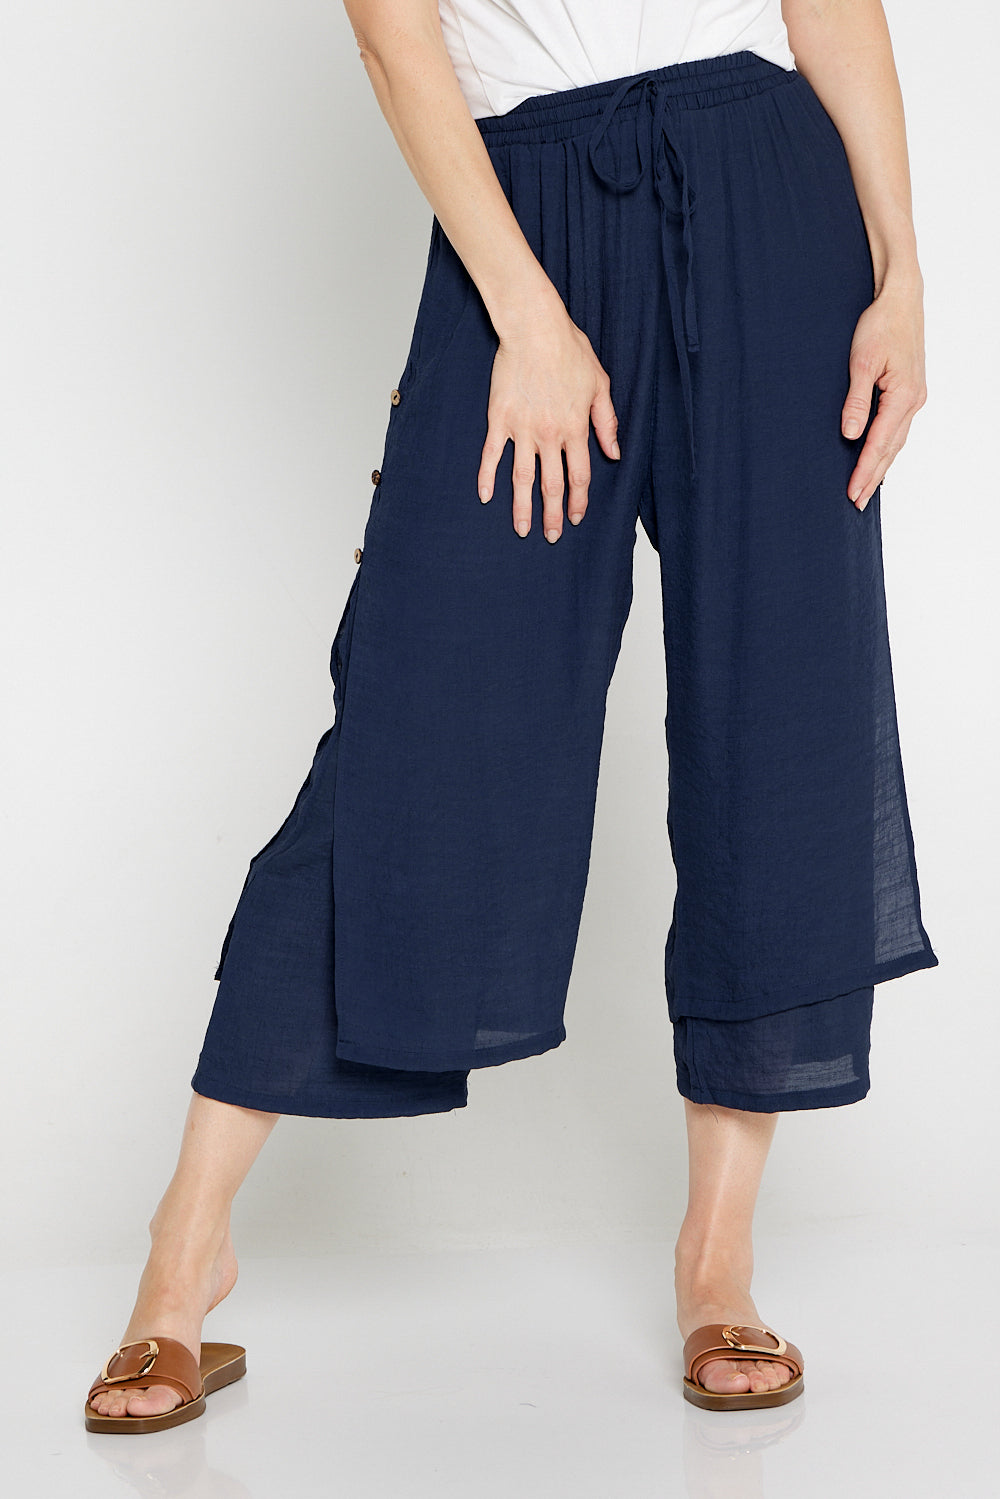 Liana Cropped Pants - Navy